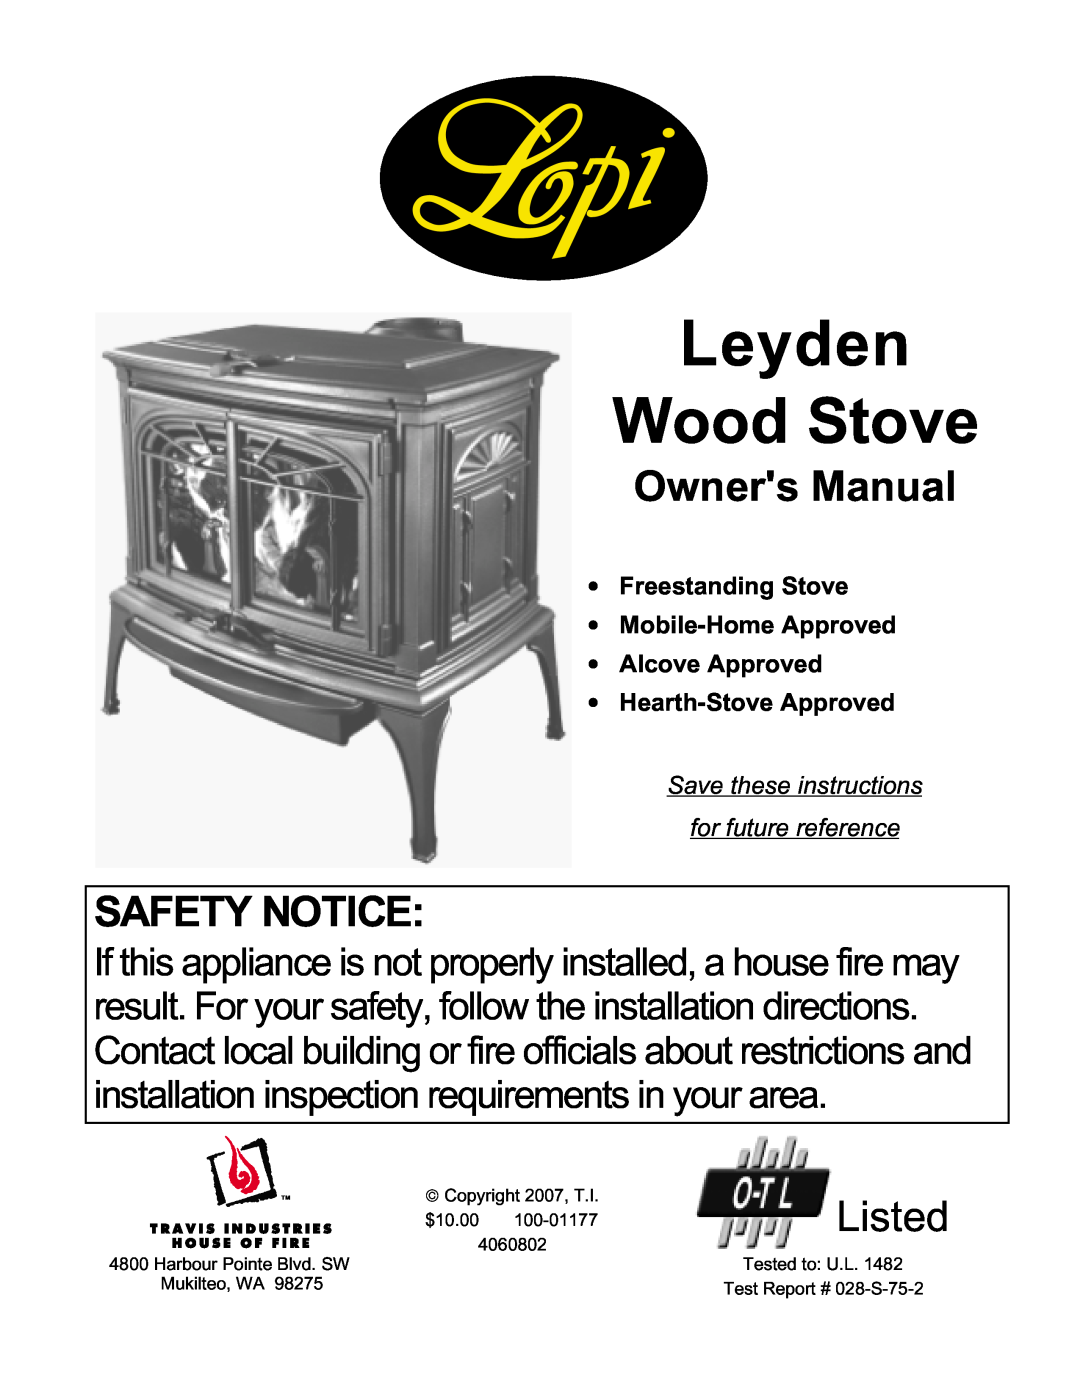 Lopi Leyden Wood Stove owner manual Safety Notice, Listed 